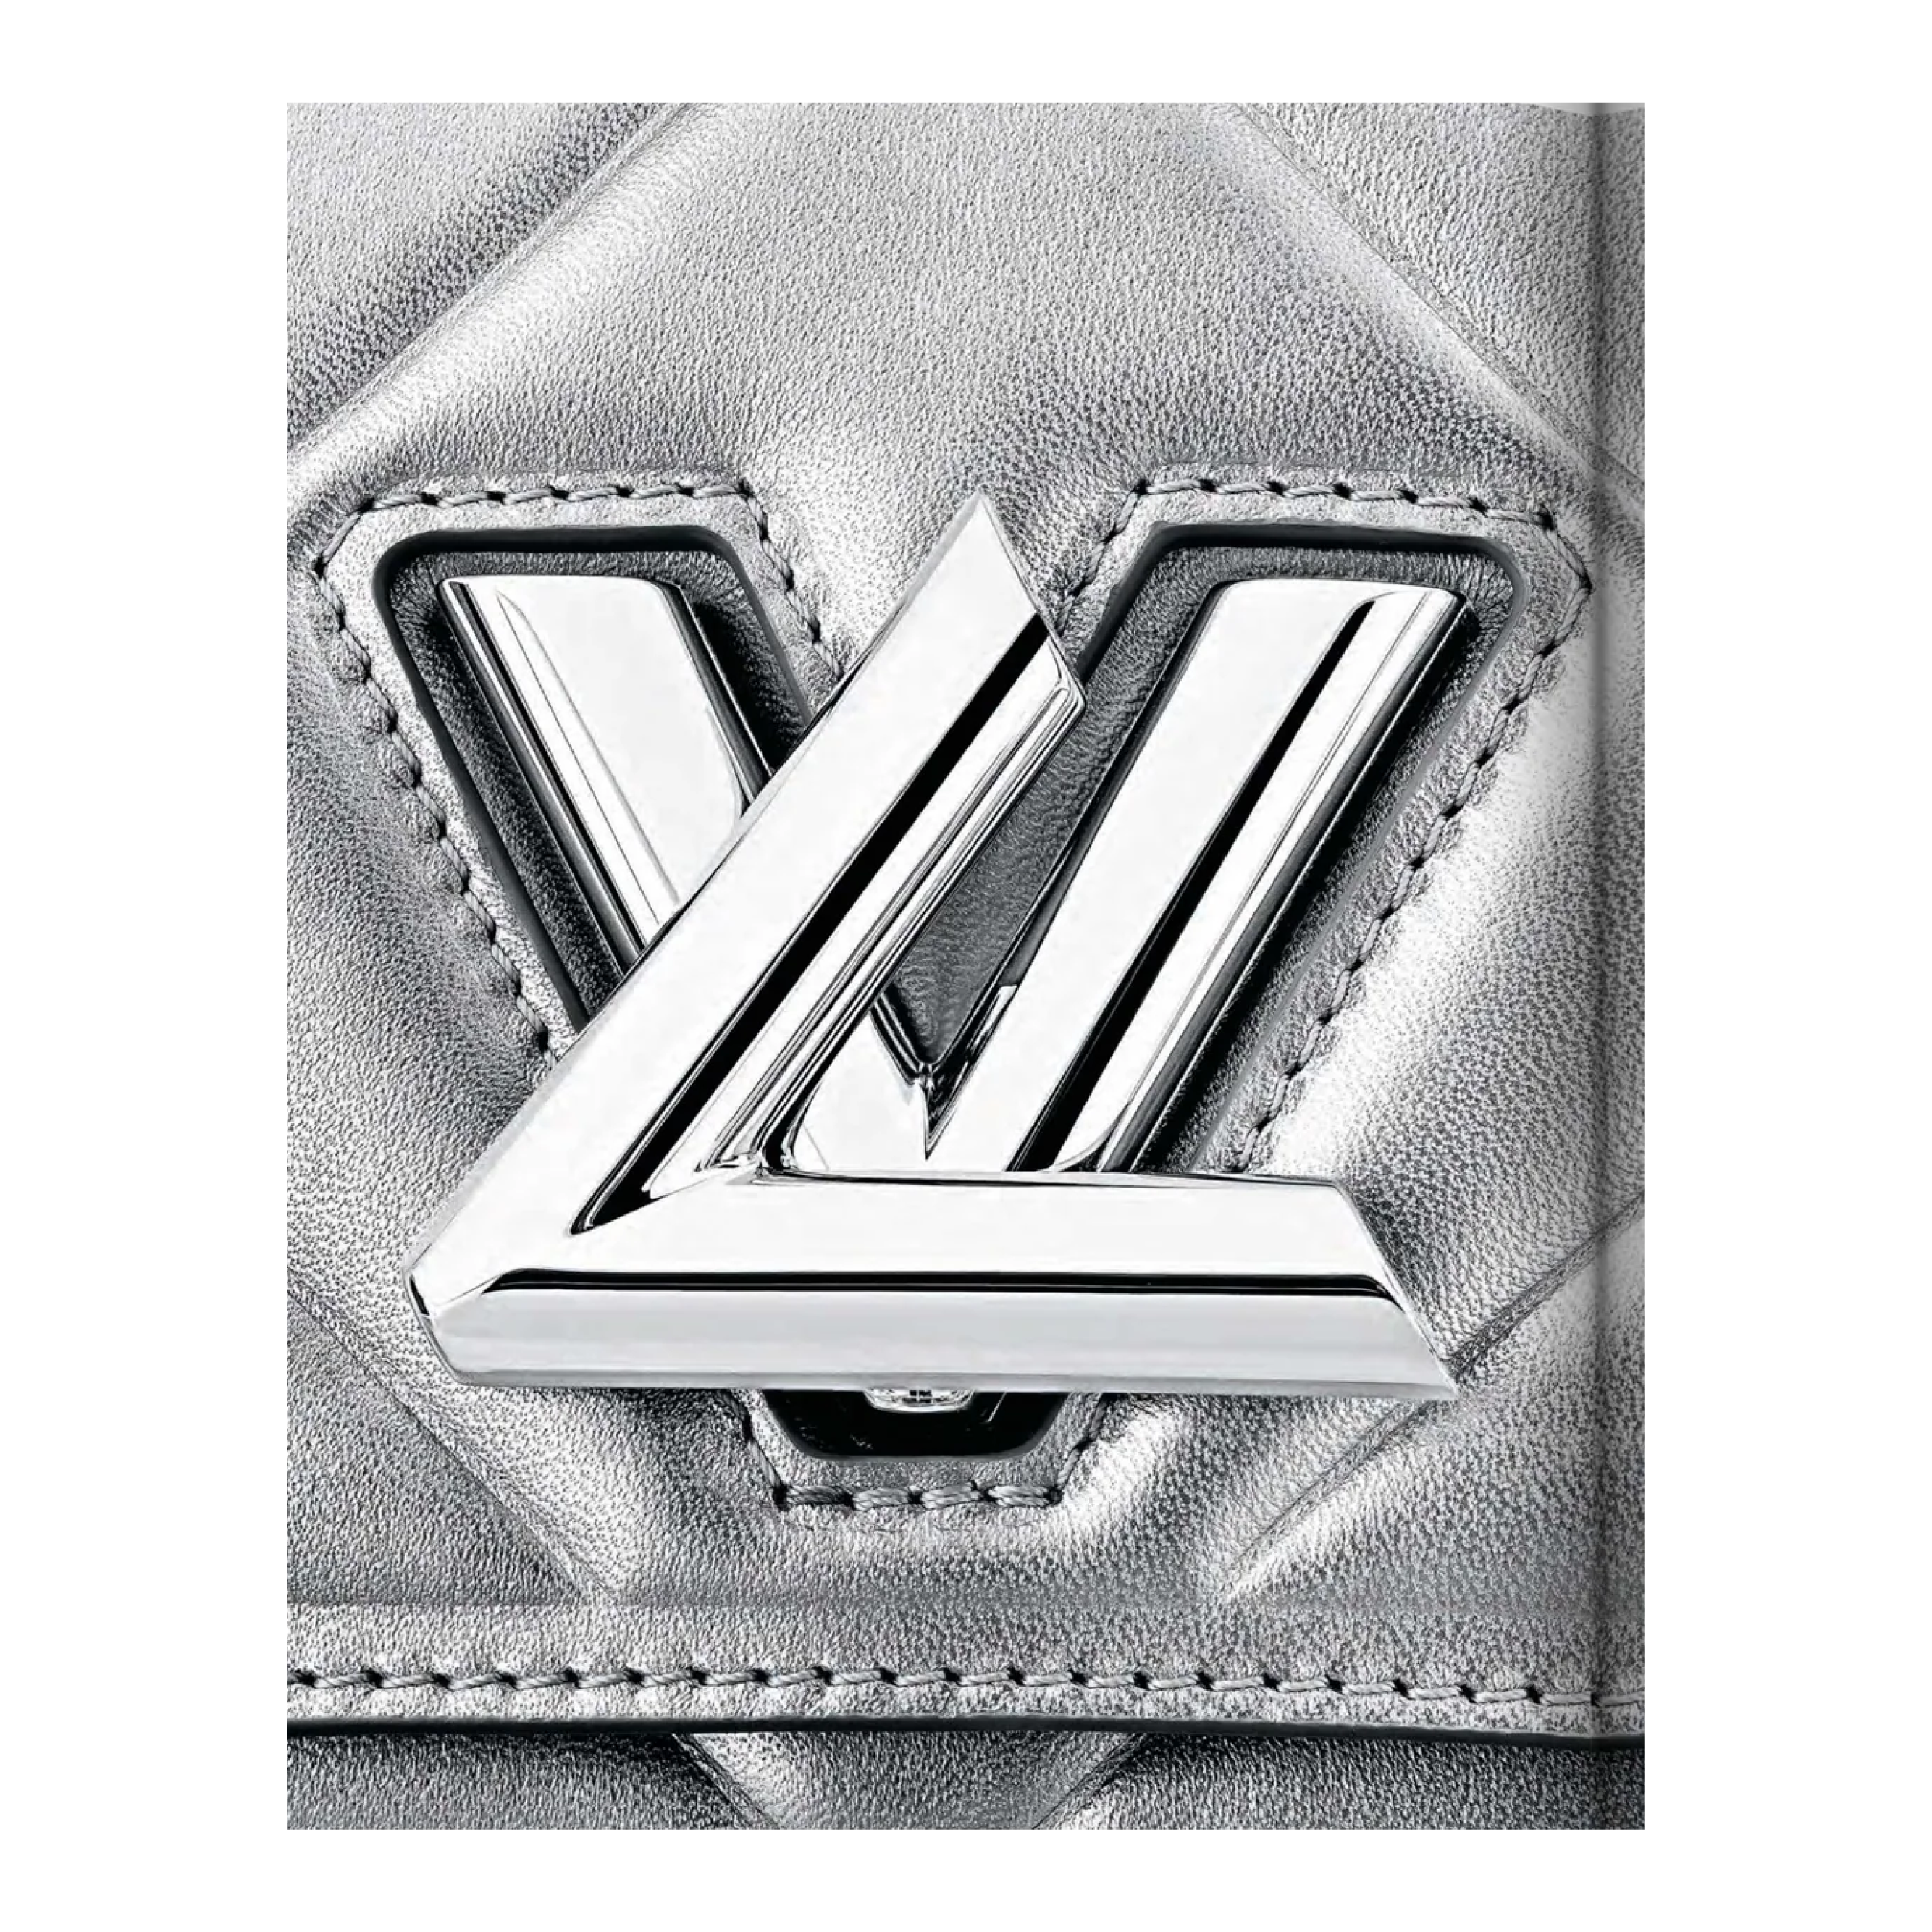 Louis Vuitton Skin: Architecture of Luxury (New York Edition)